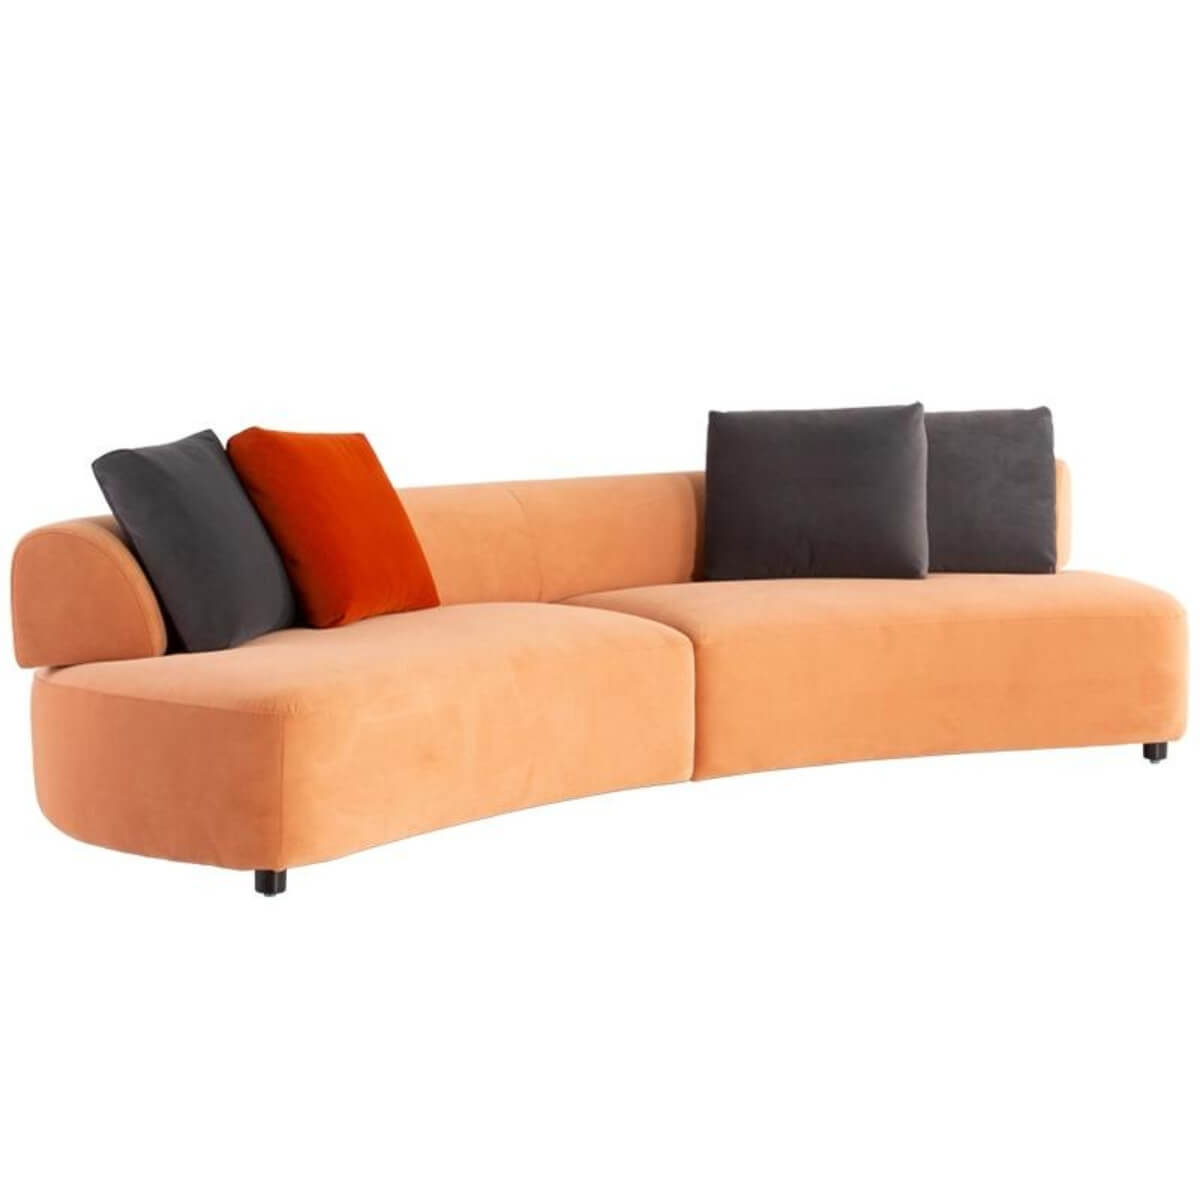 Lounge Lyric Comfortable Cotton Linen Sofa